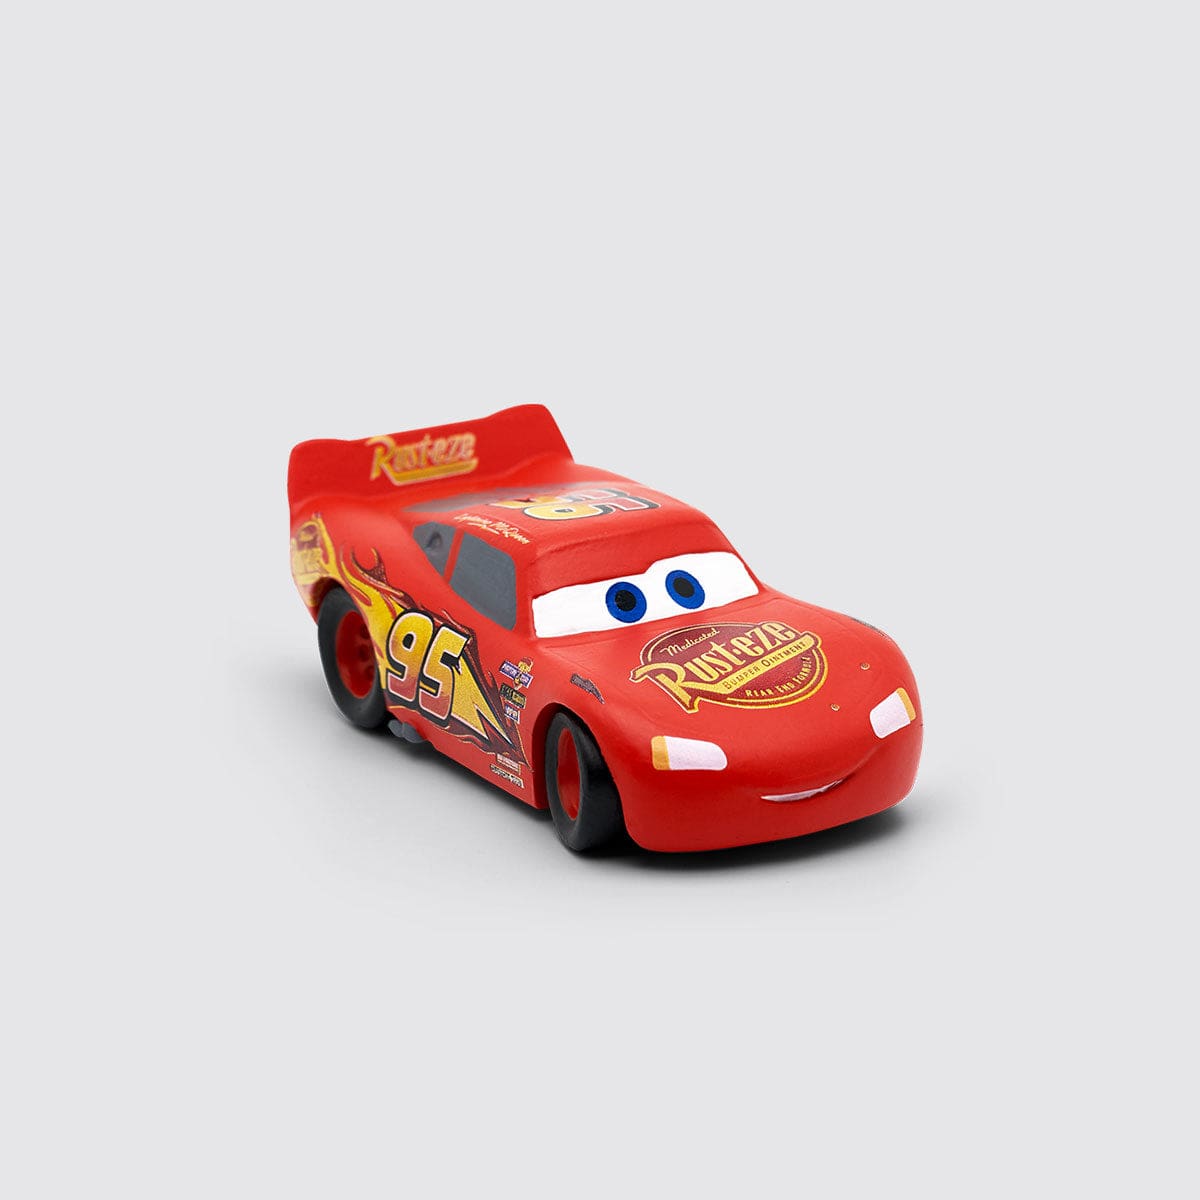 Tonies Disney® & Pixar Cars: Lightning McQueen Tonie at Von Maur